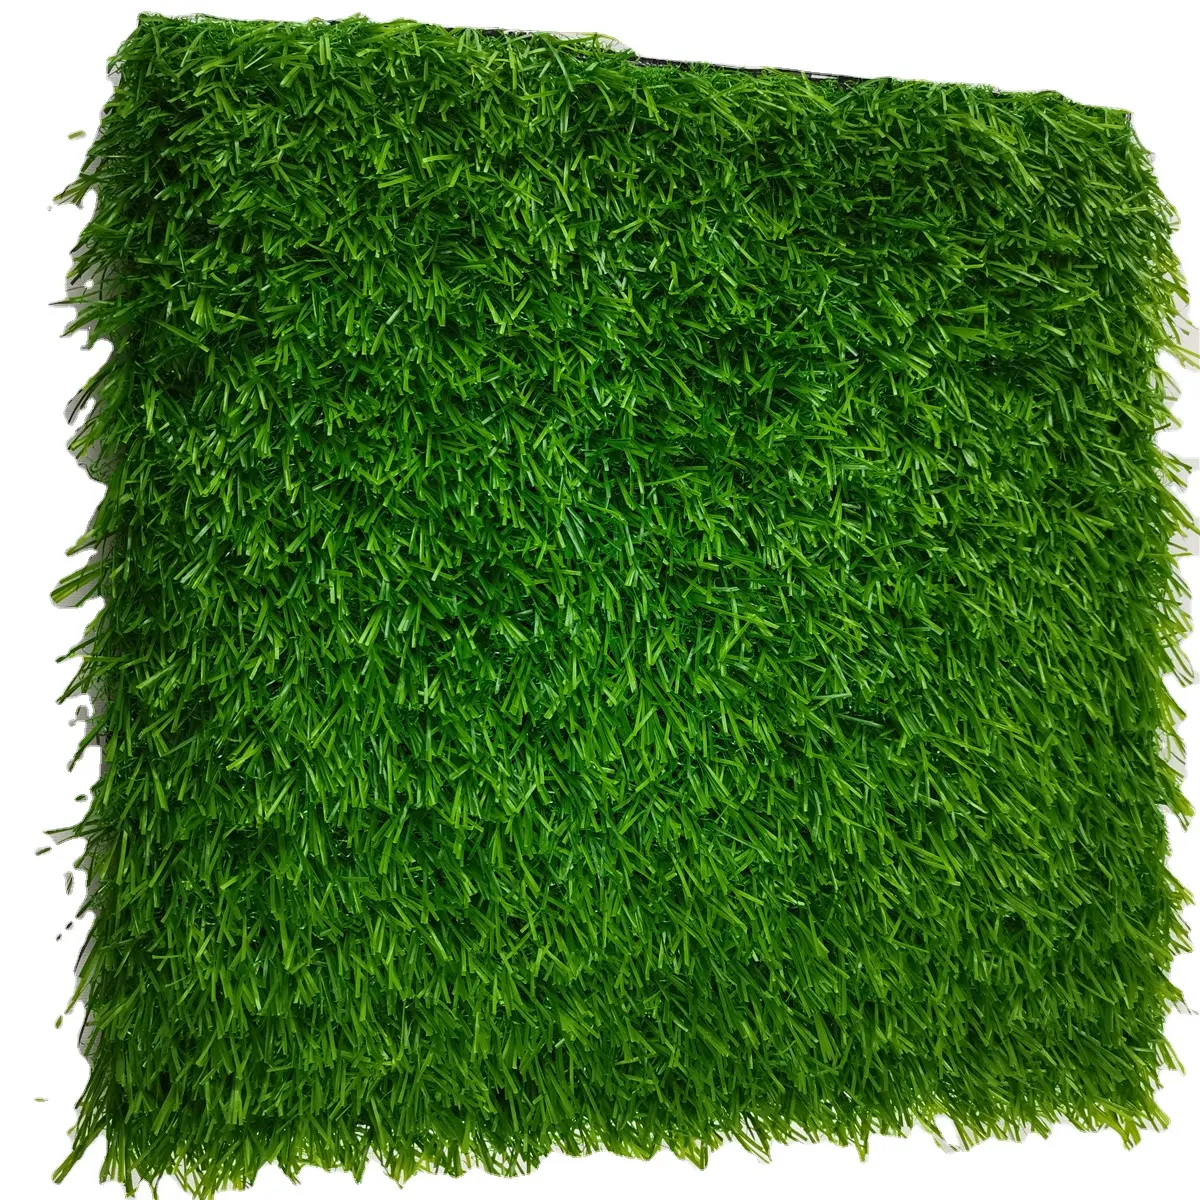 DIY outdoor synthetic turf tiles flooring carpet grass tiles artificial grass interlocking tiles